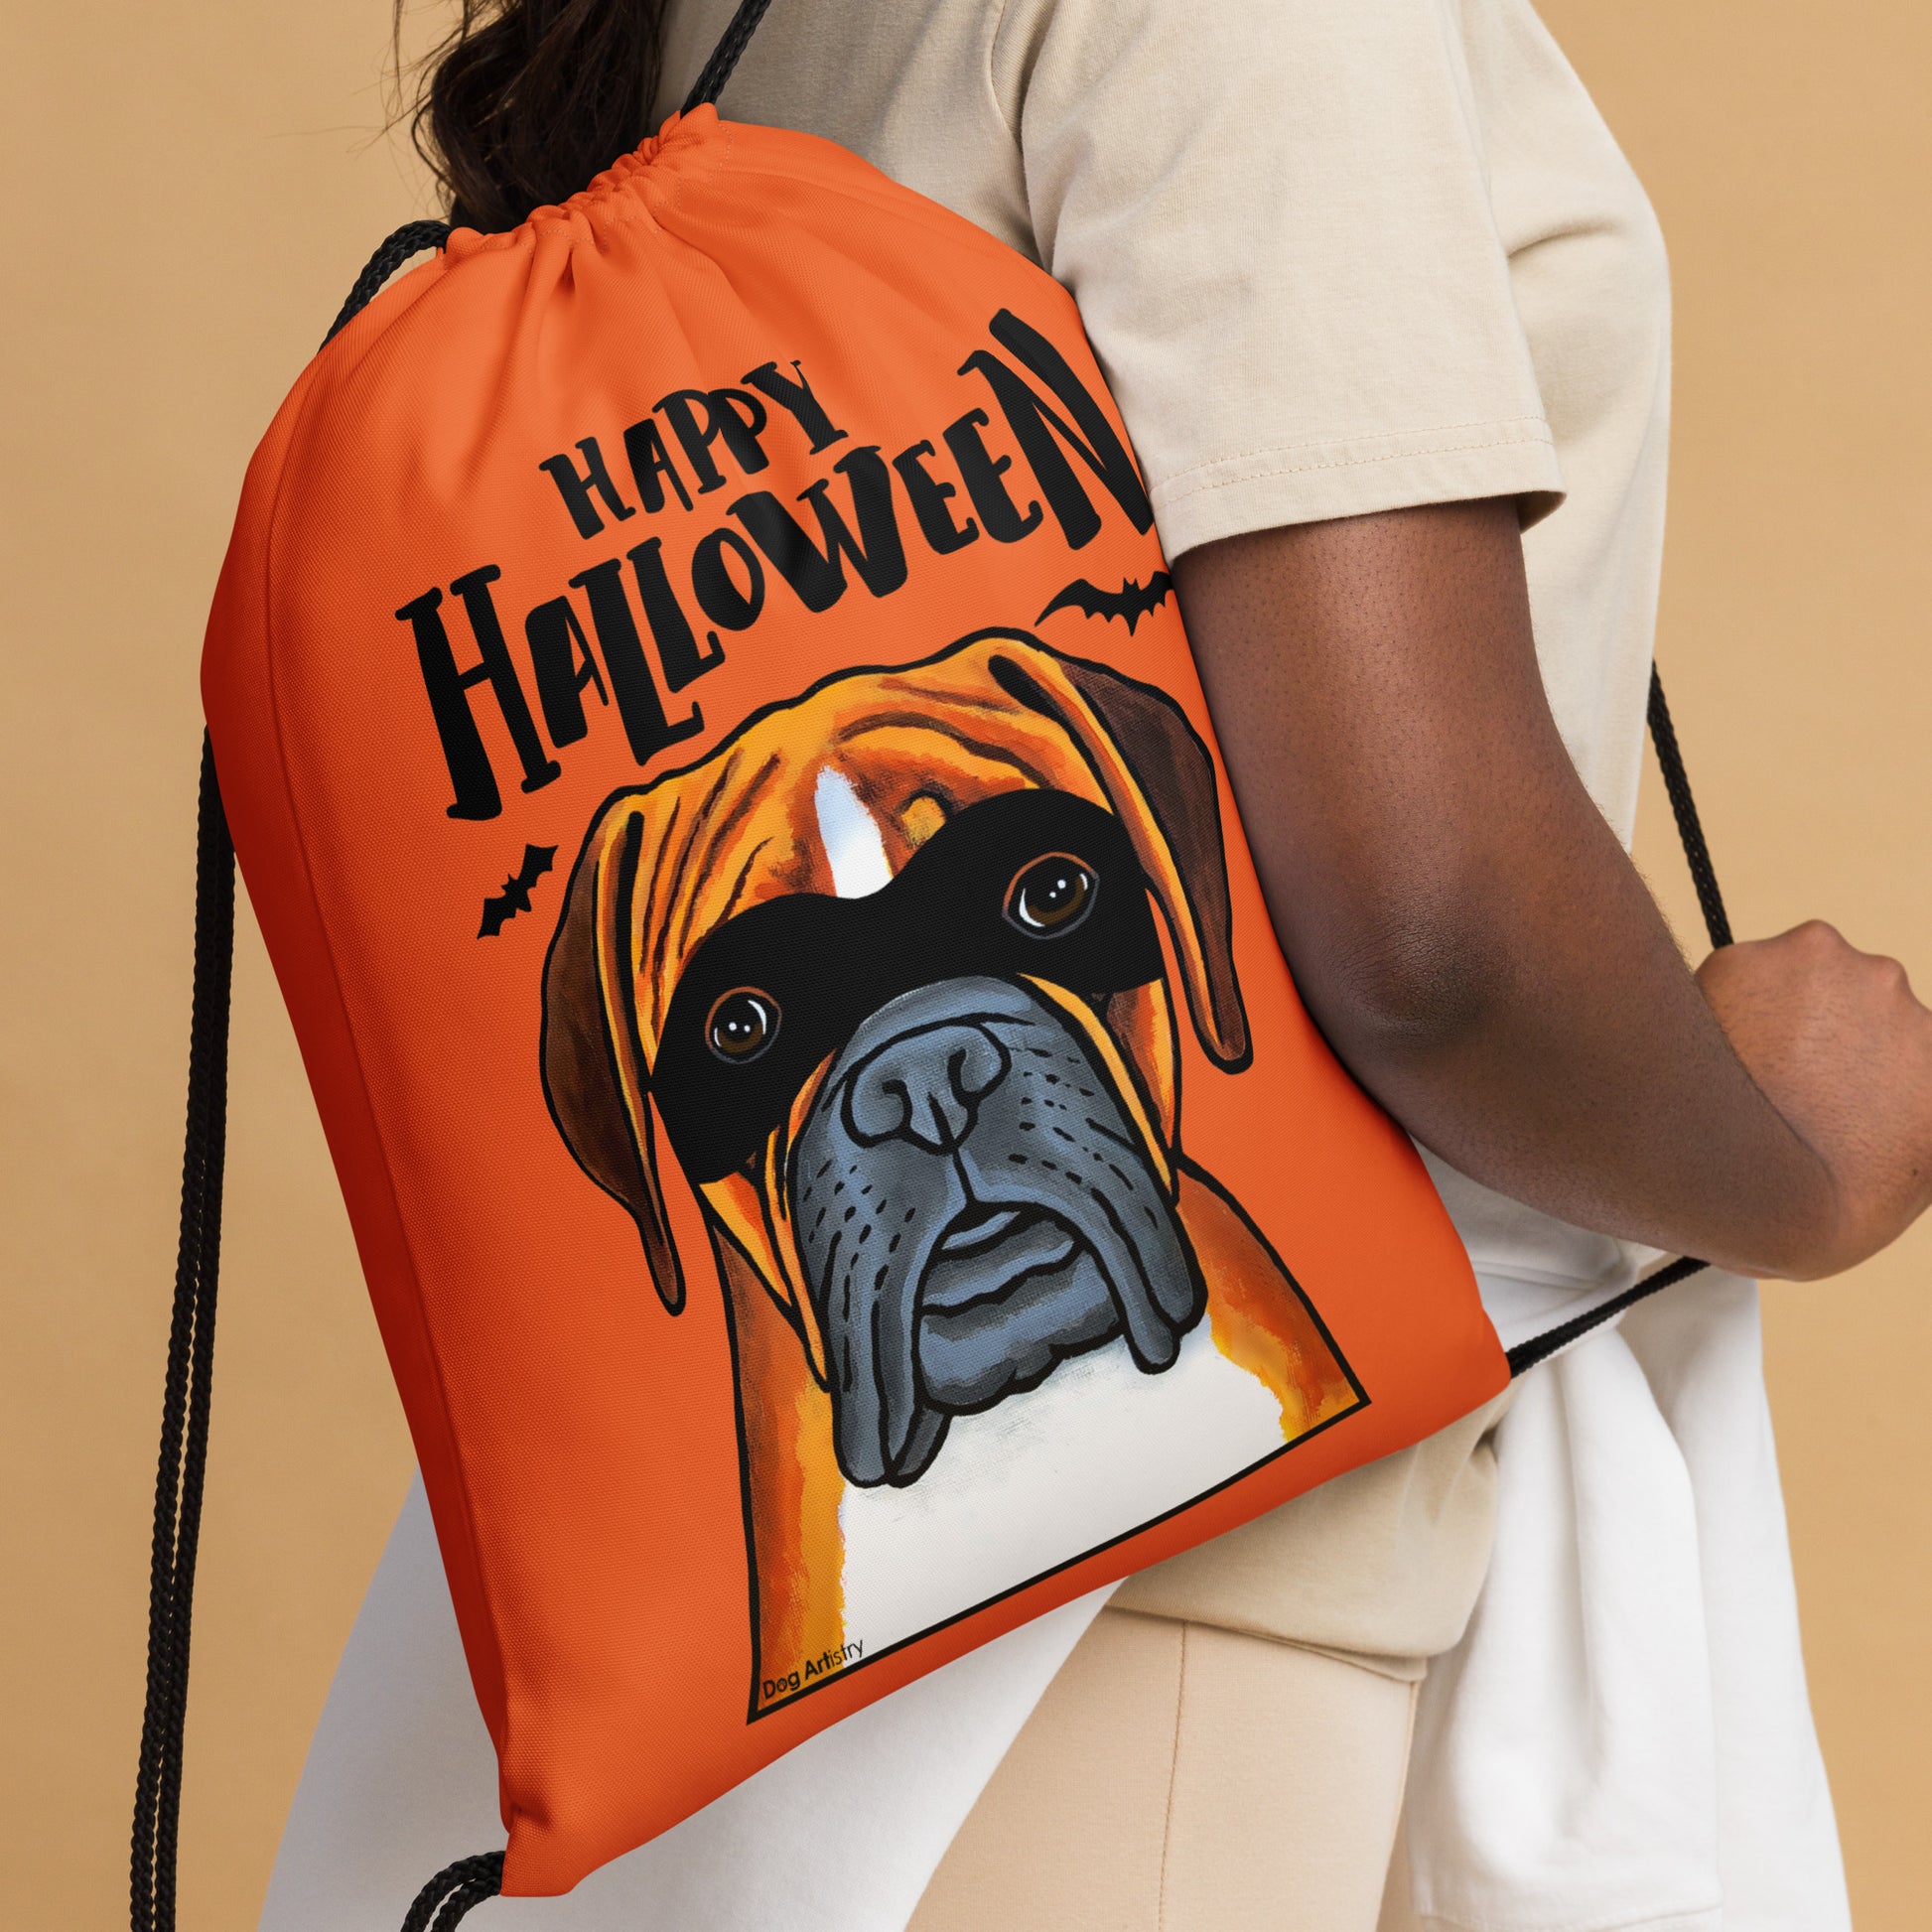 Happy Halloween Boxer Dog wearing mask drawstring bag by Dog Artistry Halloween candy bag. Orange Bag.